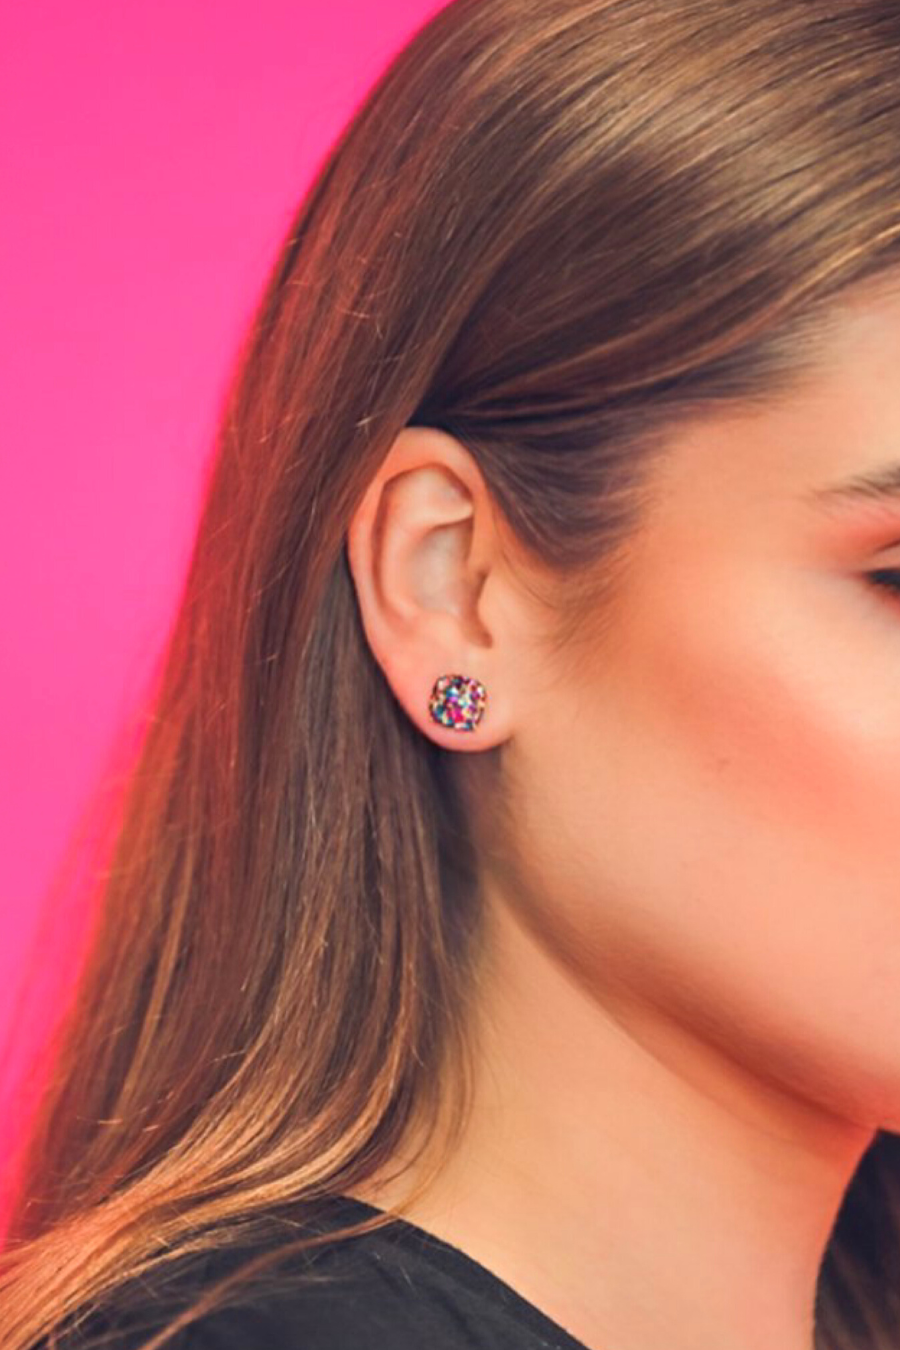 Leave A Little Sparkle Earrings - Jess Lea Wholesale